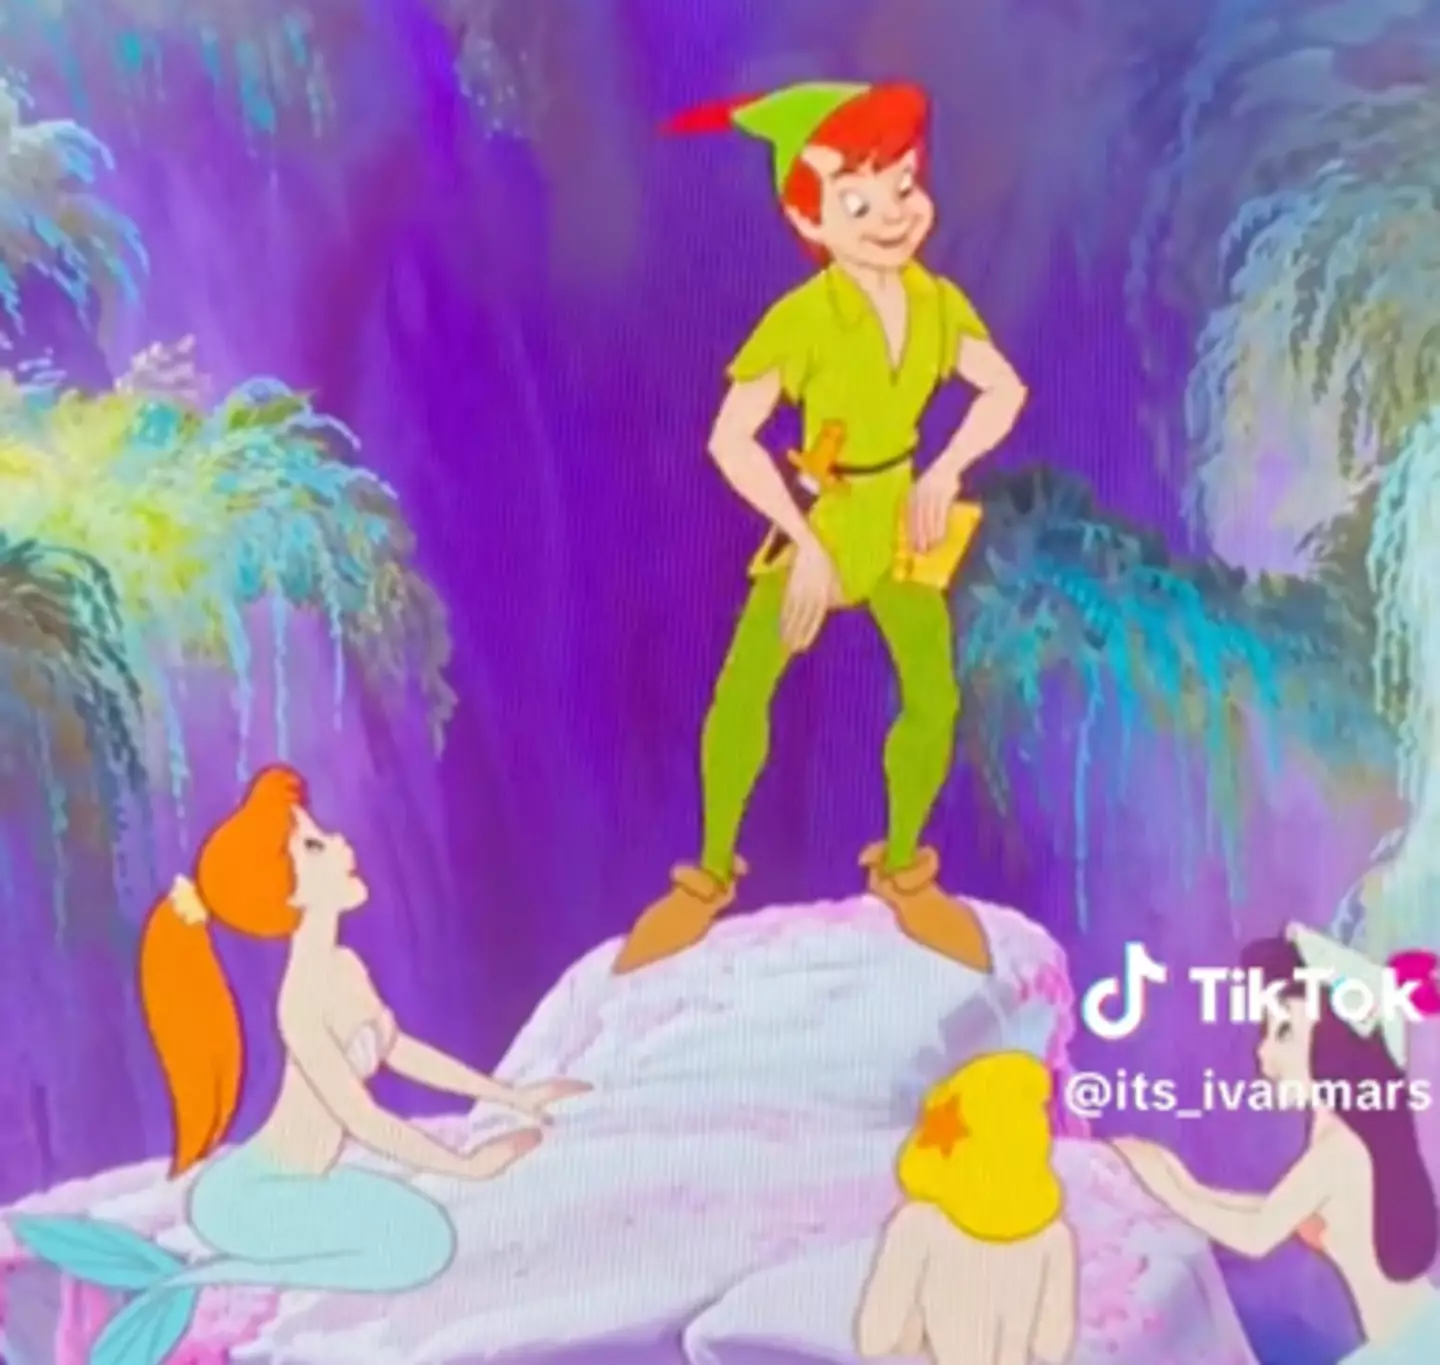 Mars believes Ariel's mother also appears in 'Peter Pan'.